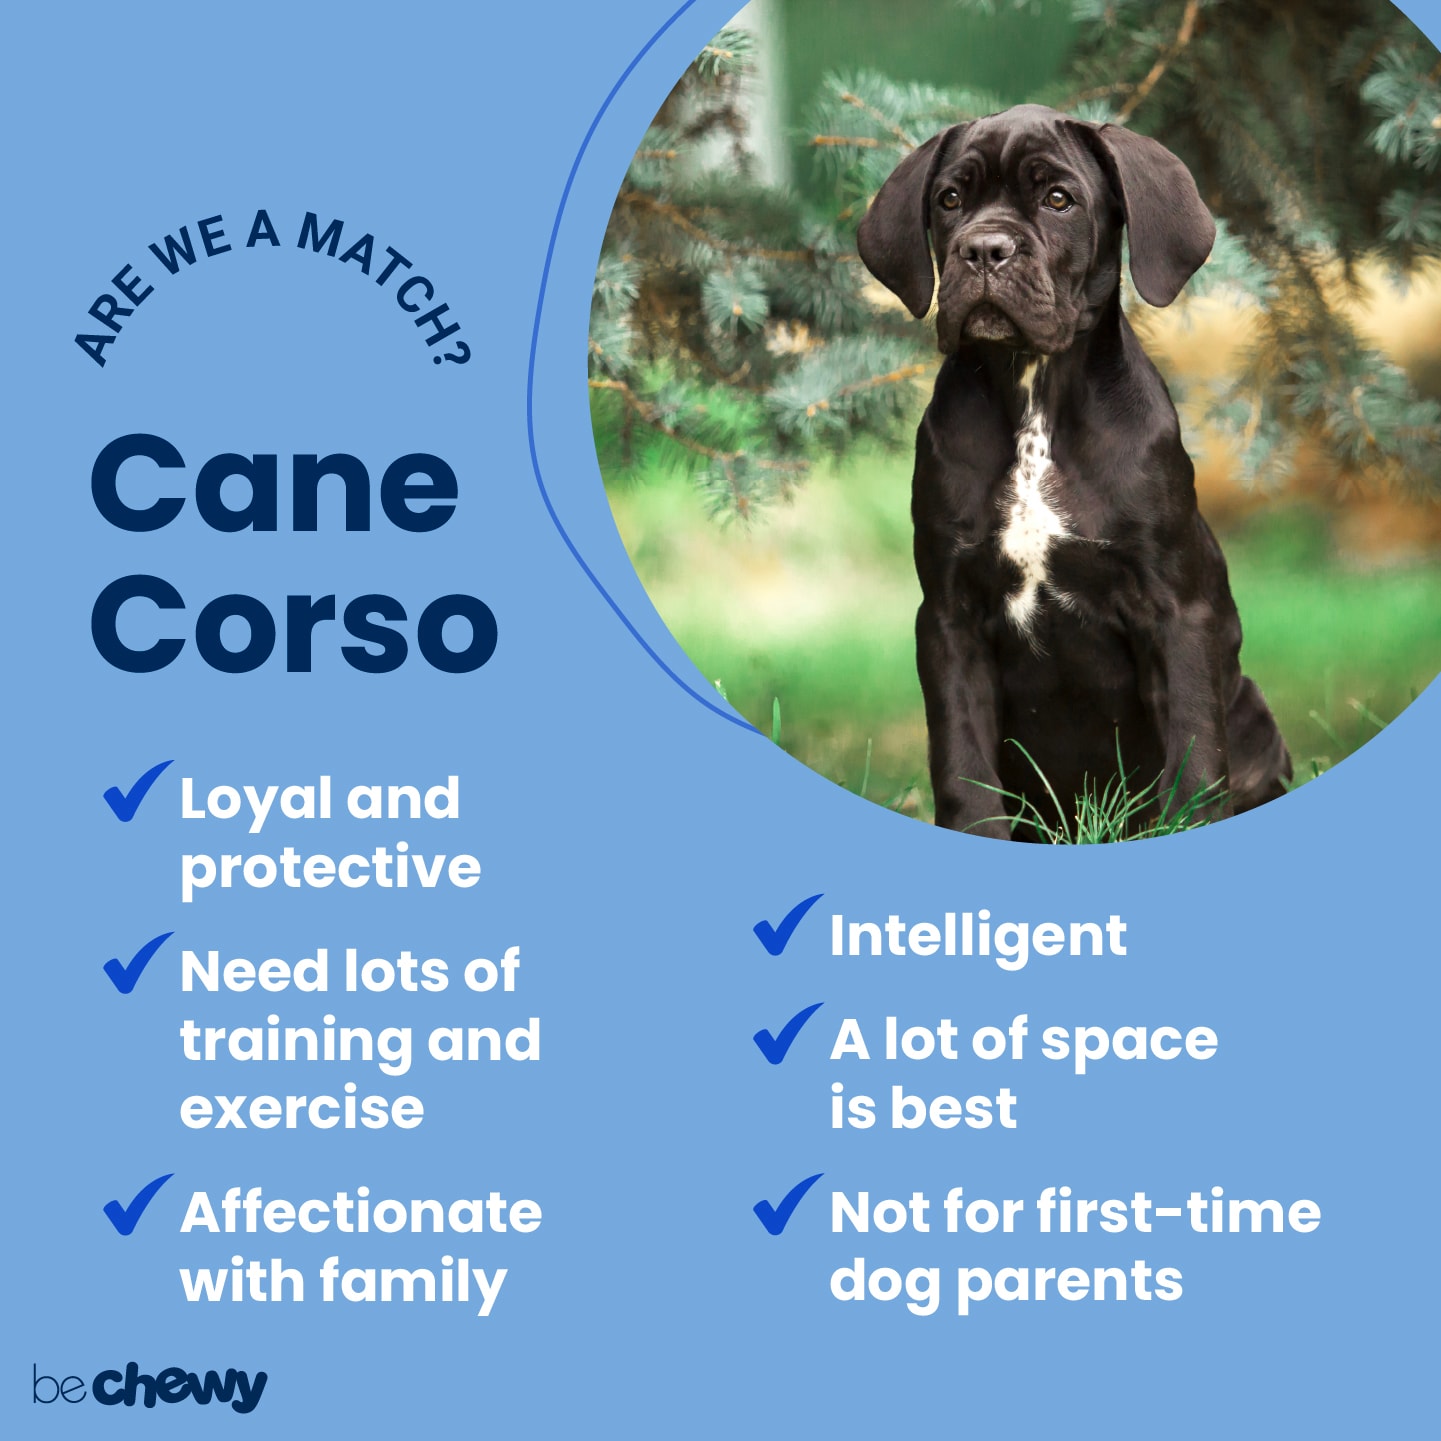 Cane Corso - Description, Energy Level, Health, Interesting Facts